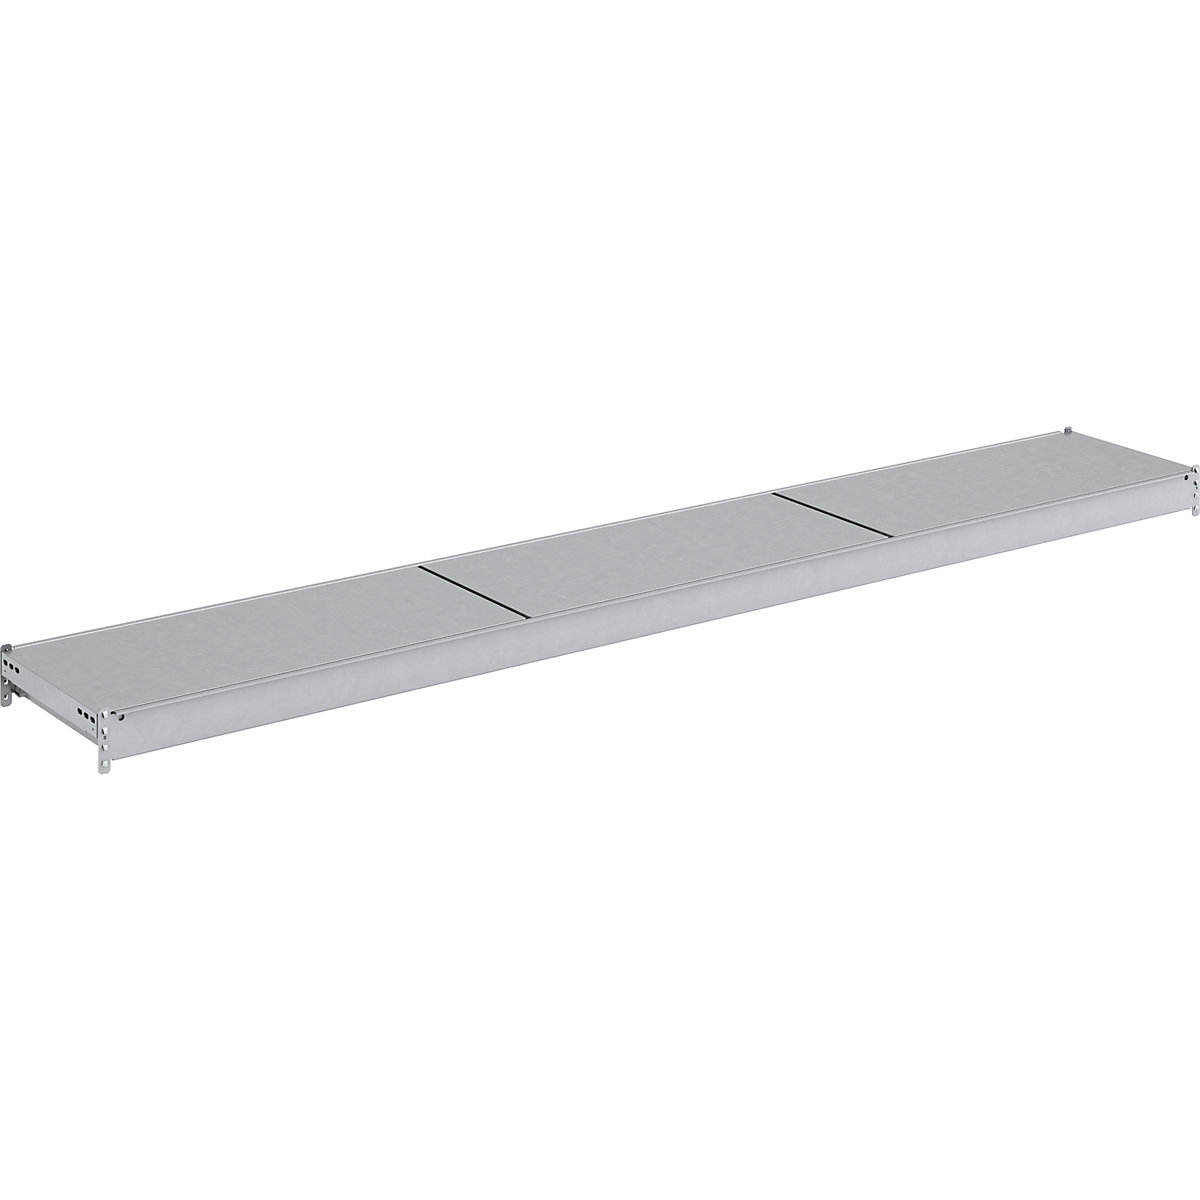 Additional shelf level with steel shelves, zinc plated - hofe